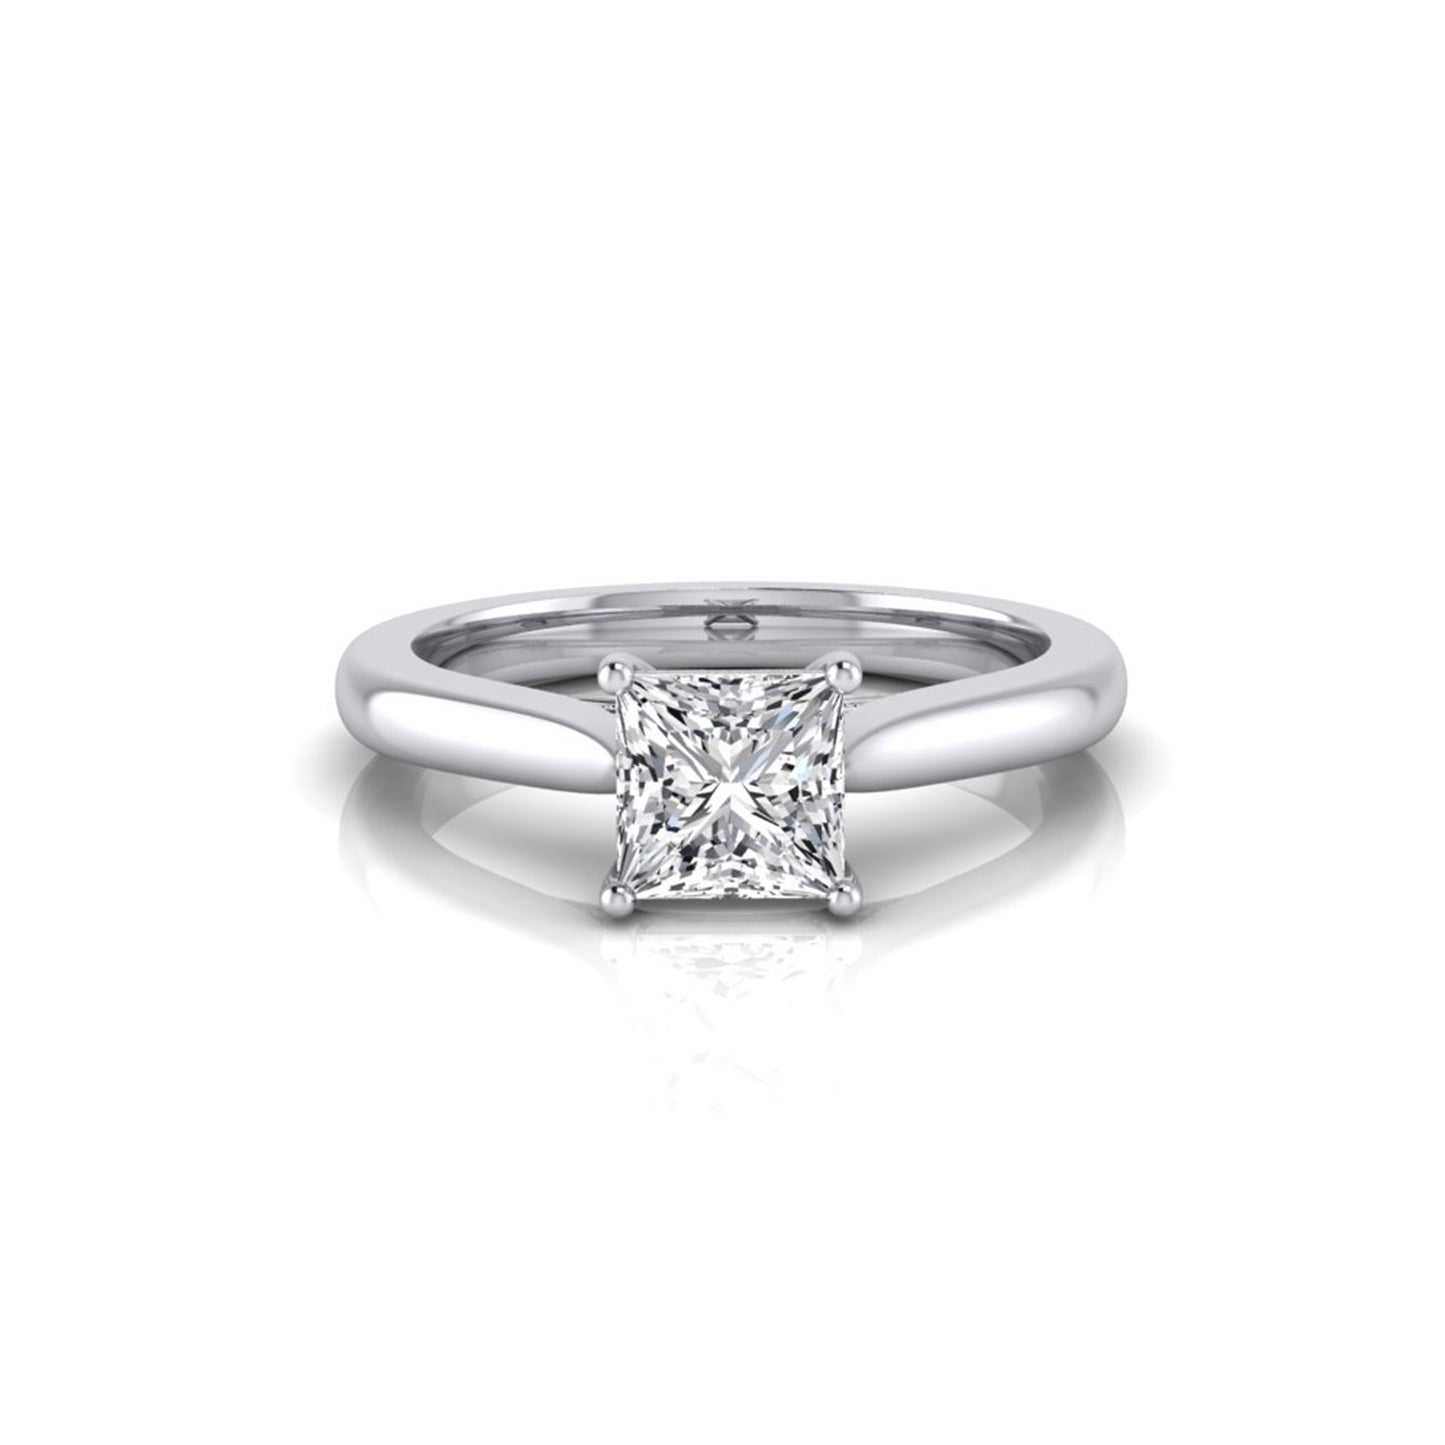 Anya Princess Diamond Solitaire 4 Claw Ring